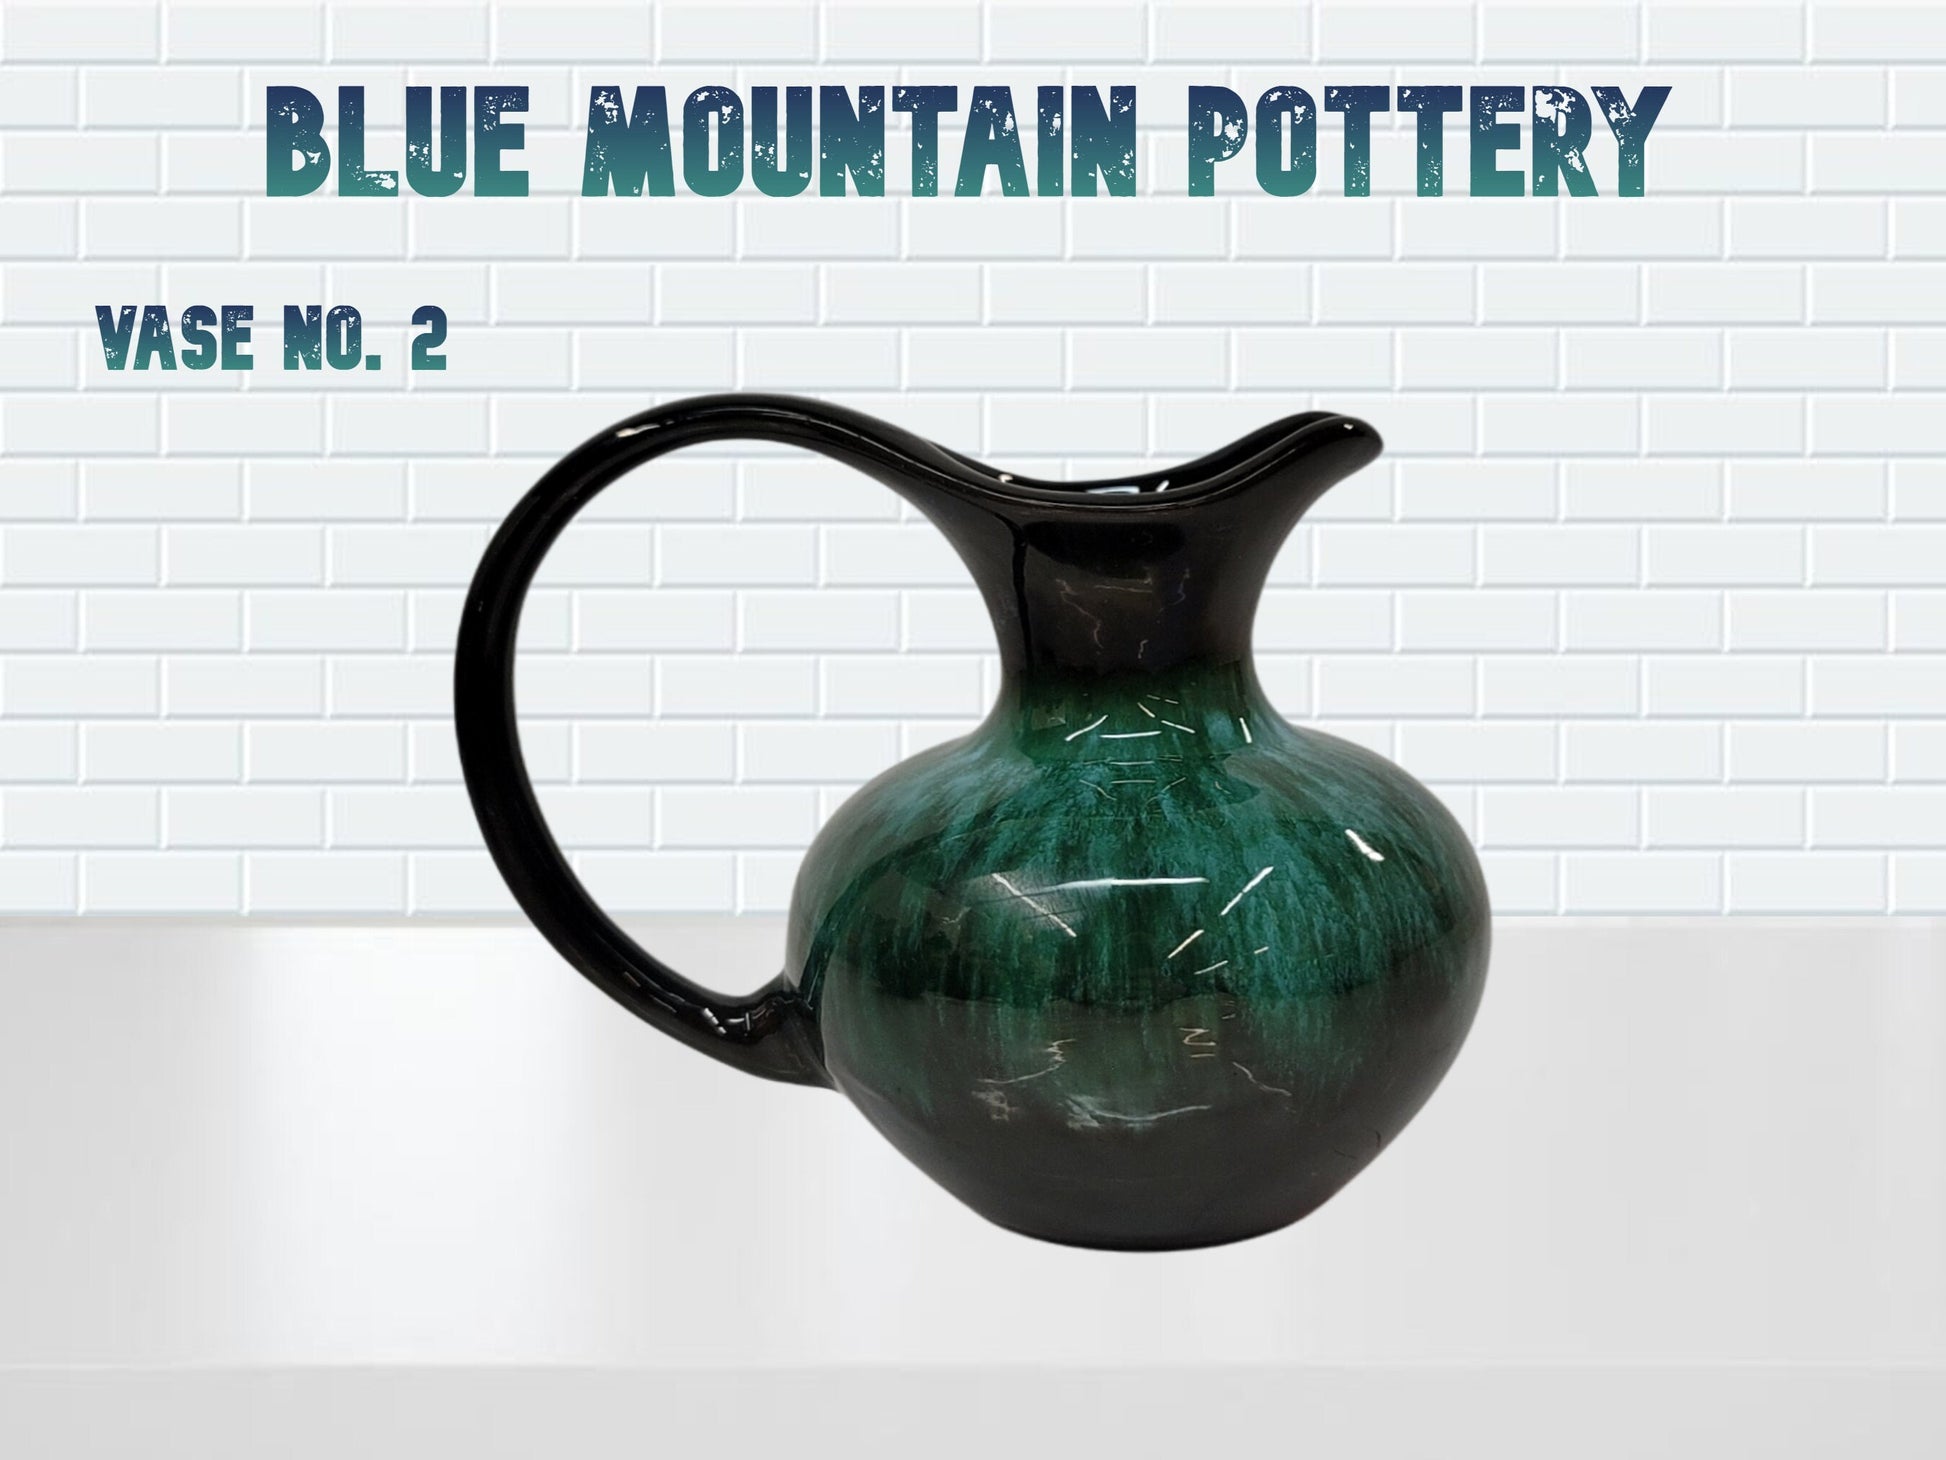 blue mountain pottery vases